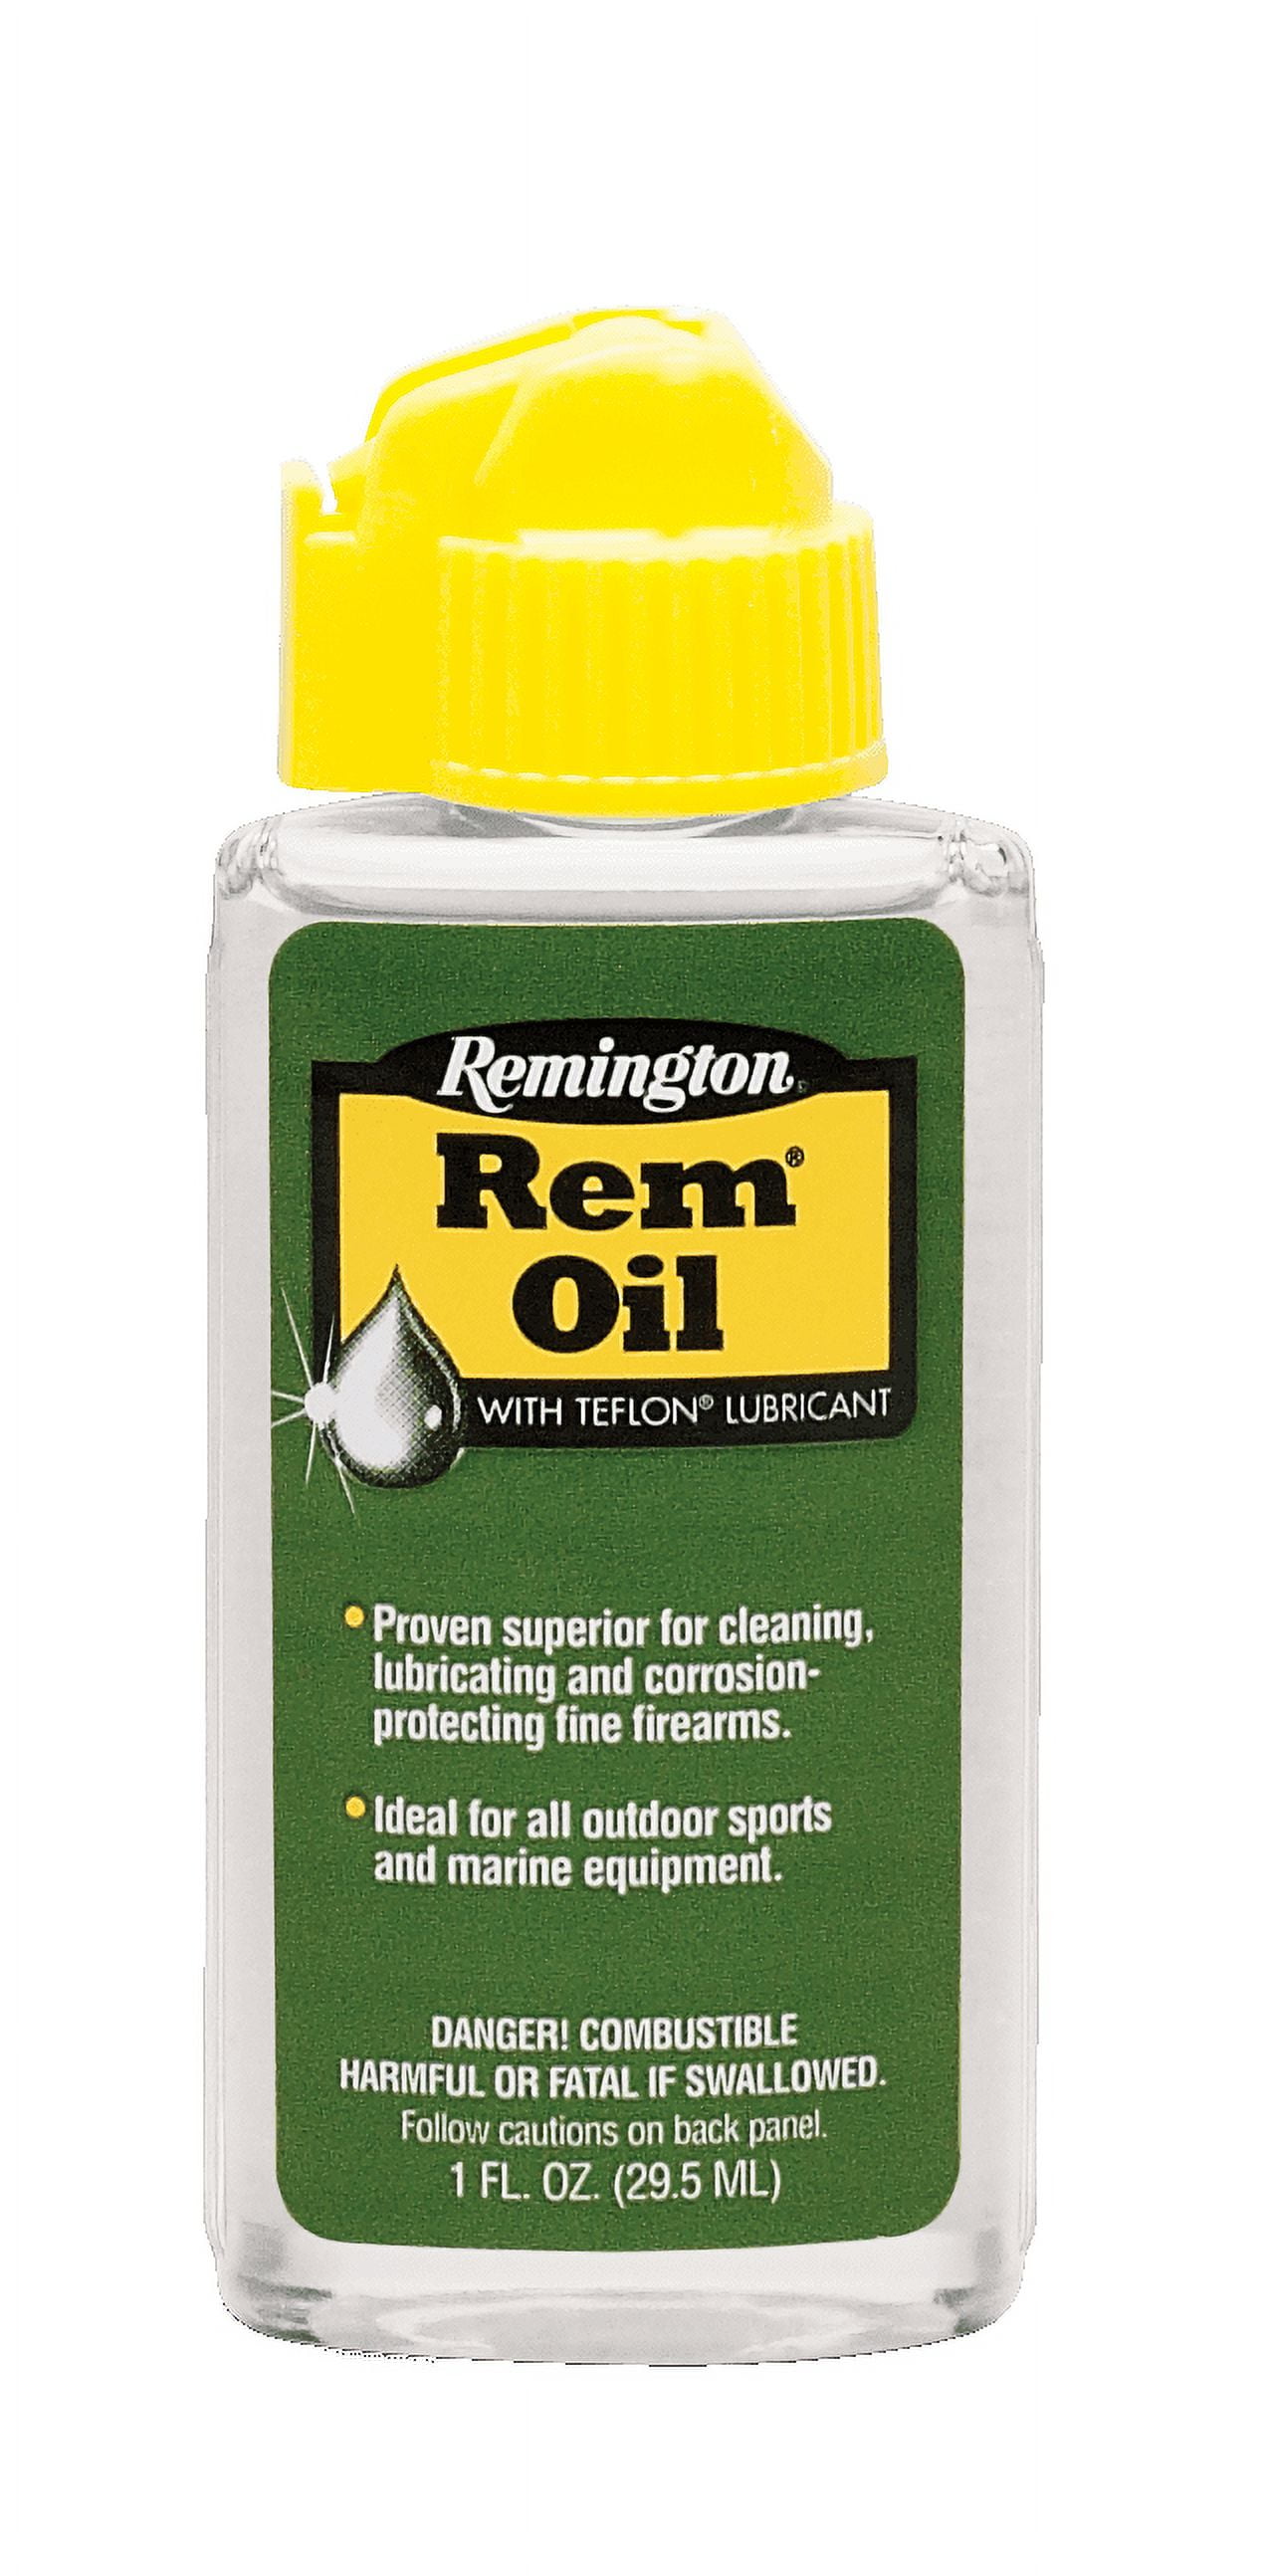 Remington Rem Oil with Teflon Gun Lubricant 1 Oz. Bottle 